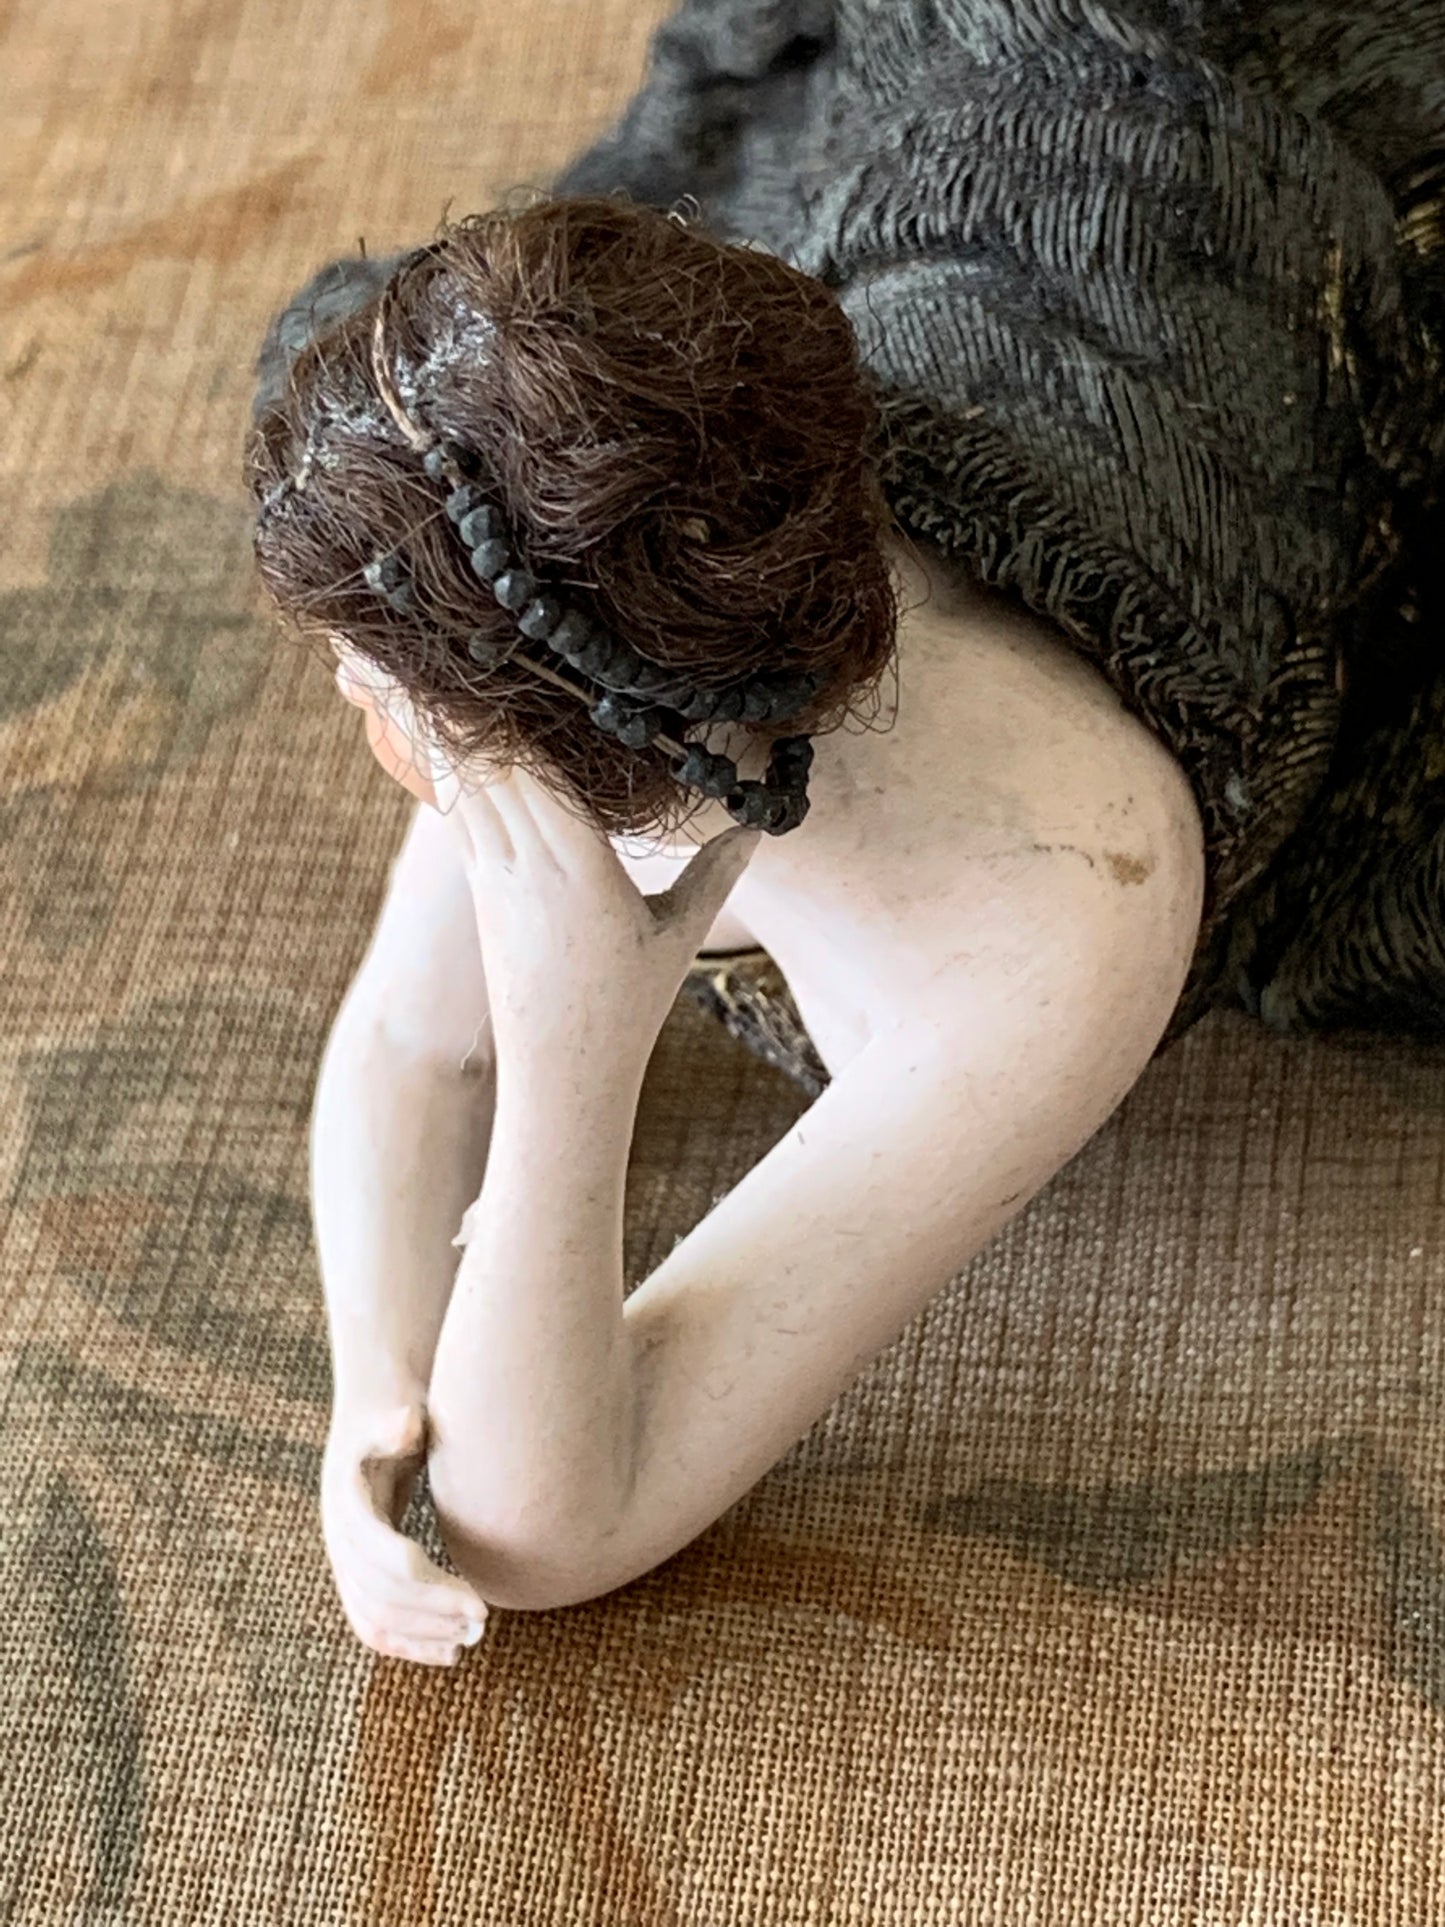 Antique miniature bathing beauty figurine